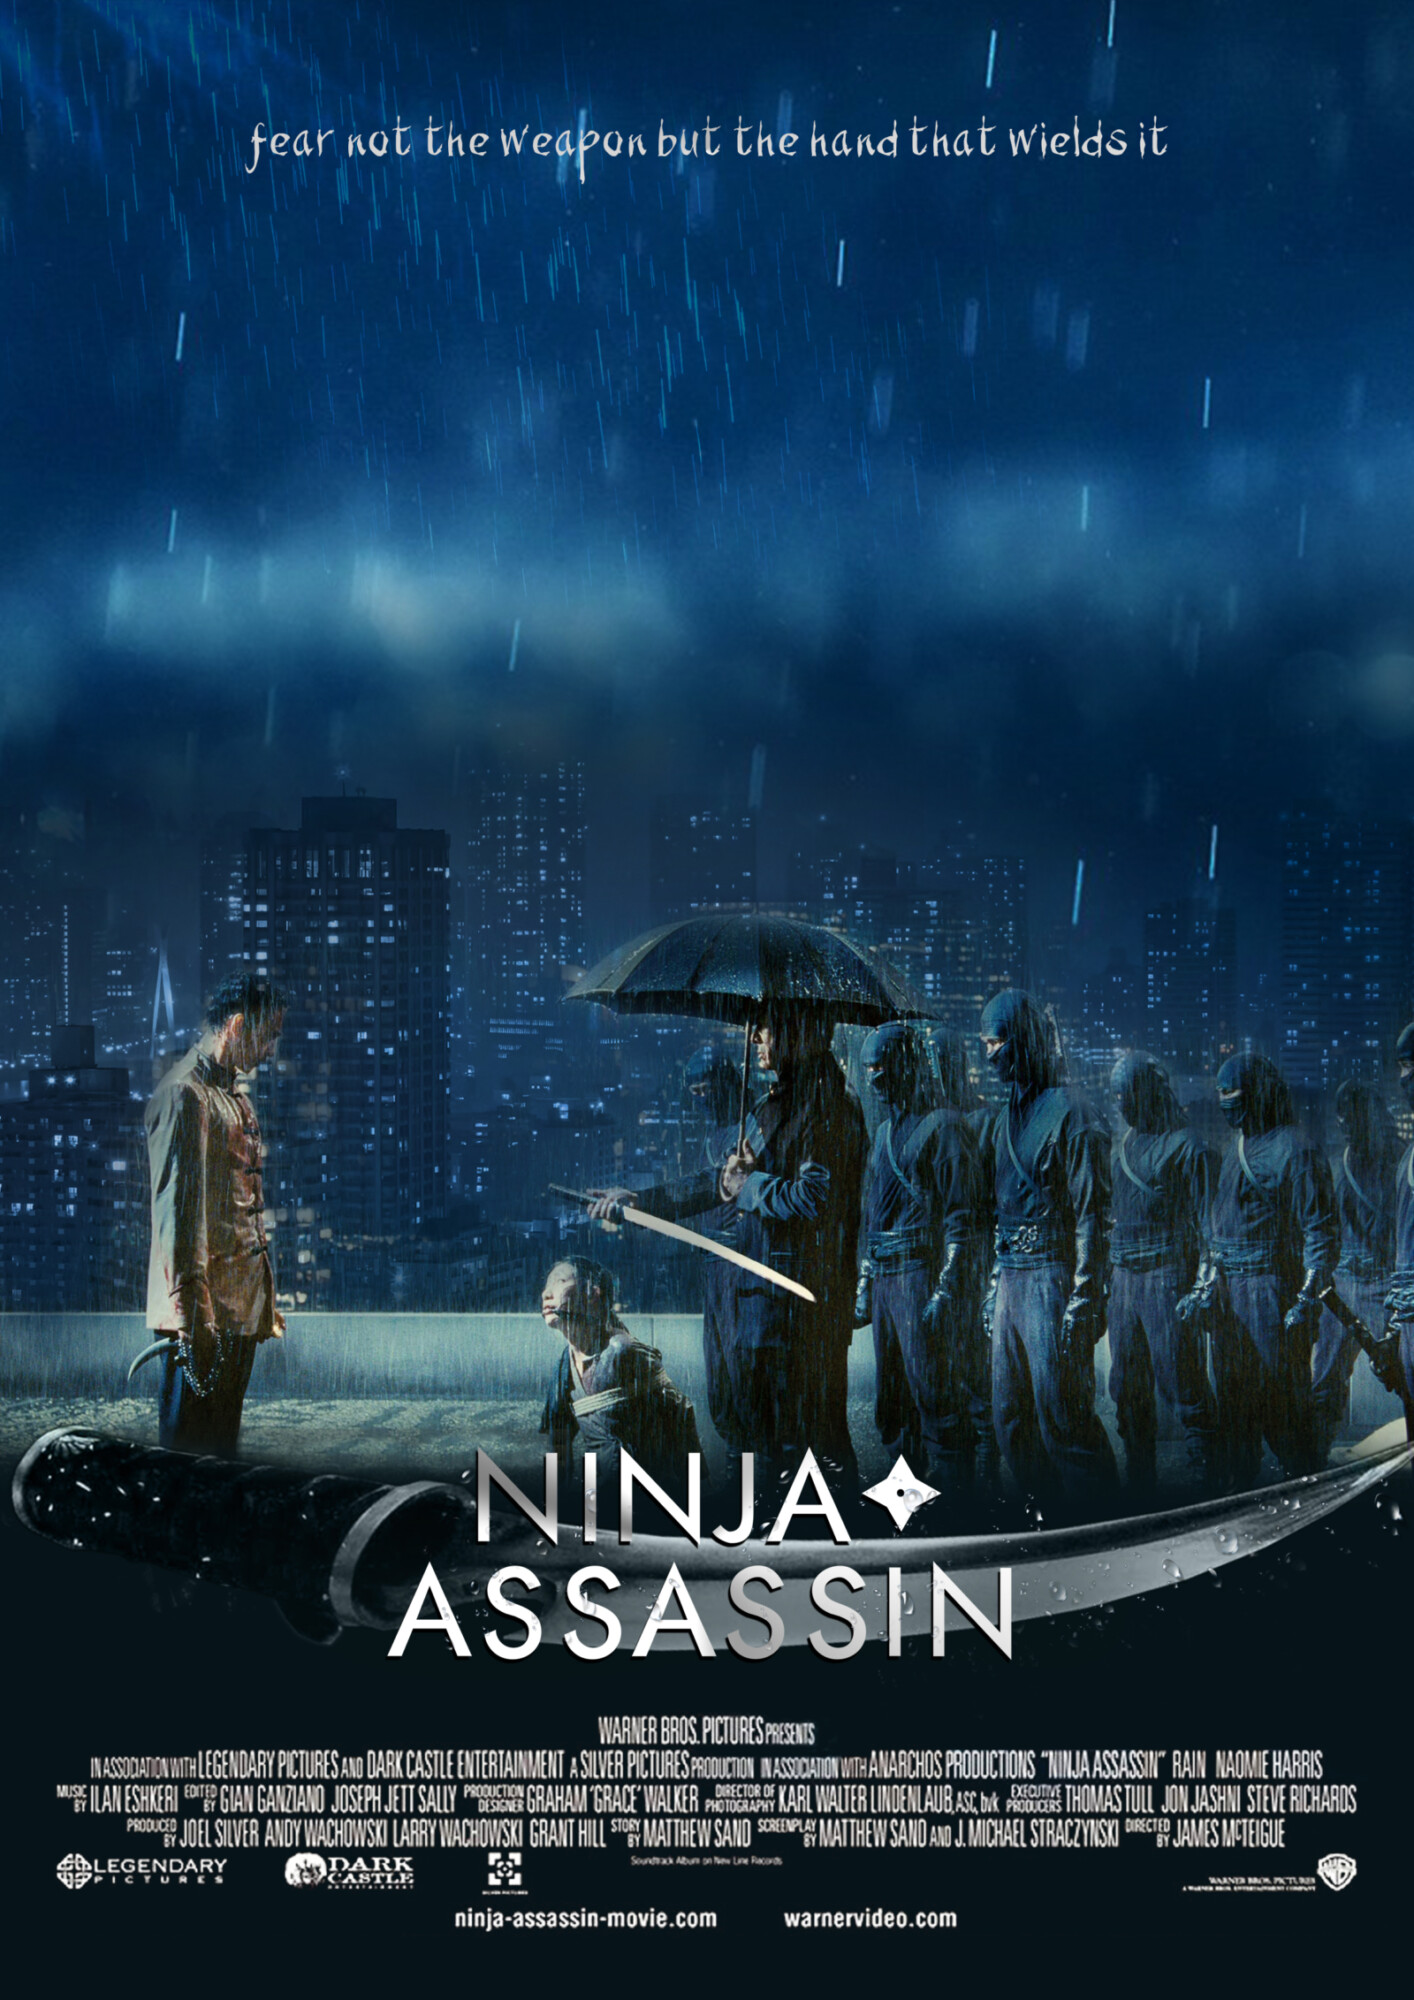 Ninja Assassin Production Notes